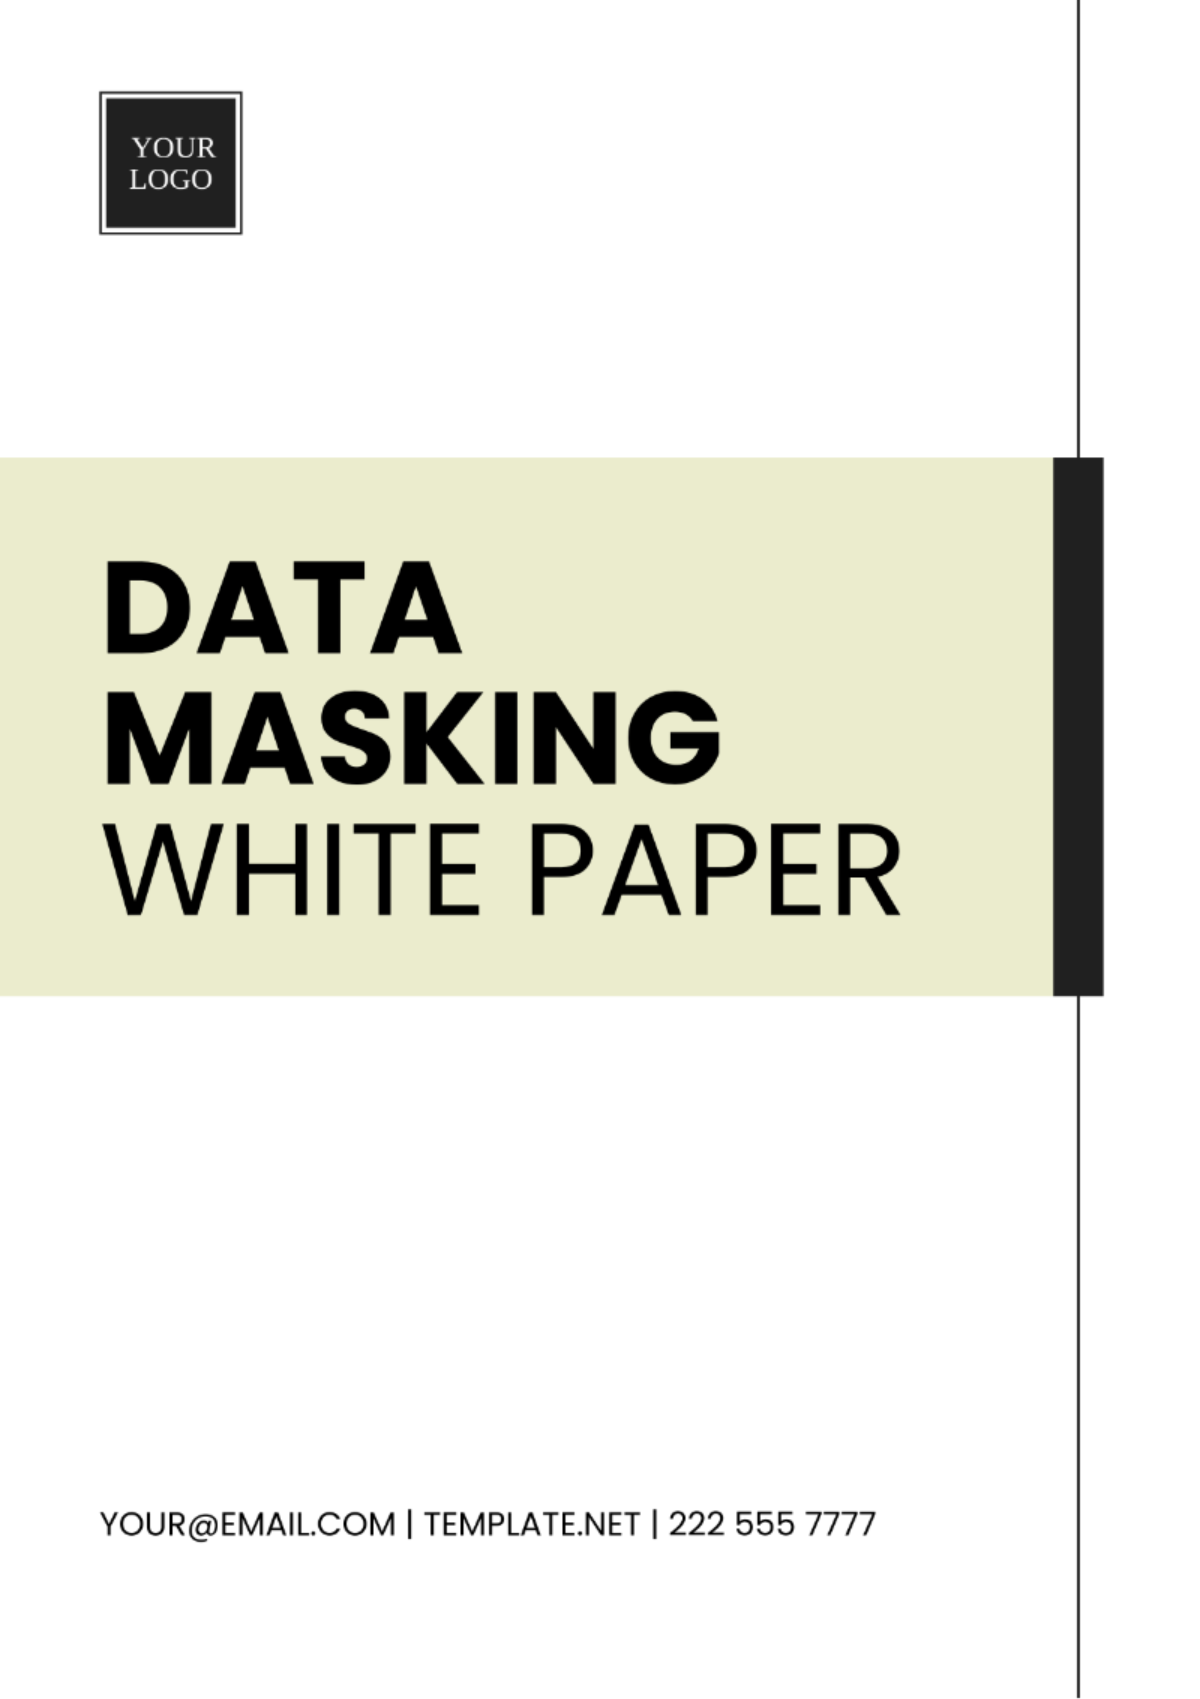 Data Masking White Paper Template